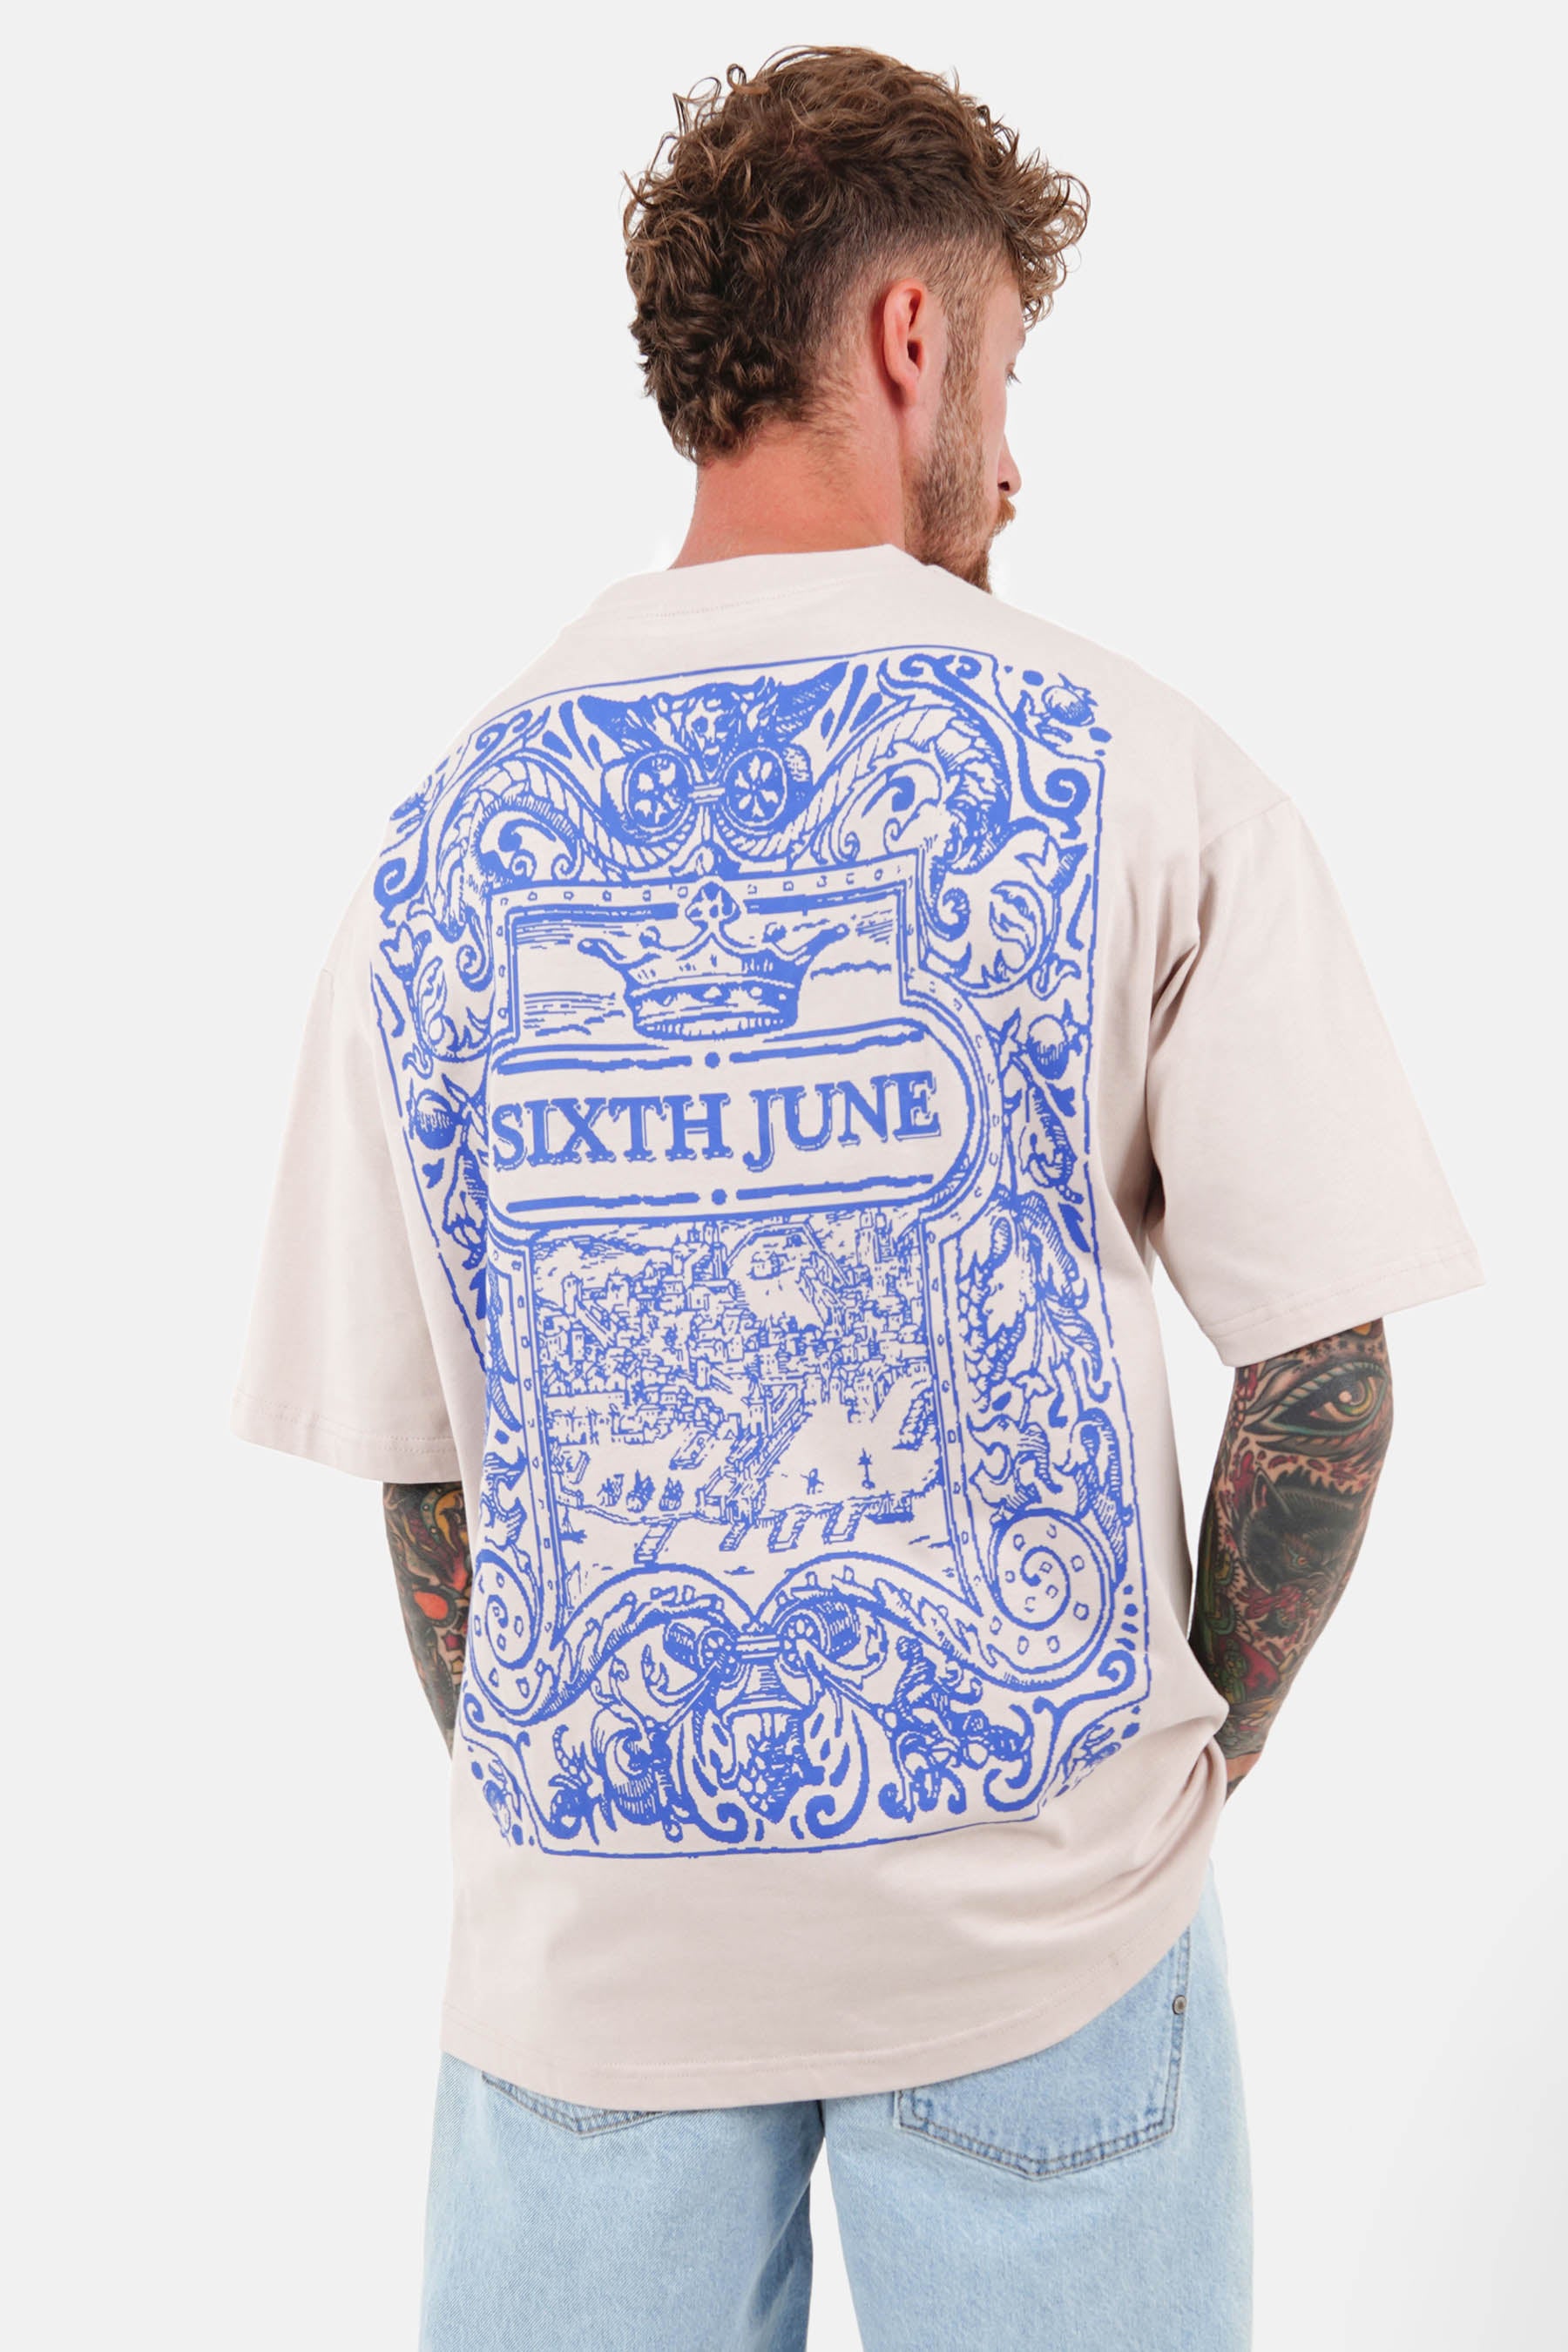 Beigefarbenes T-Shirt mit Azulejo-Muster